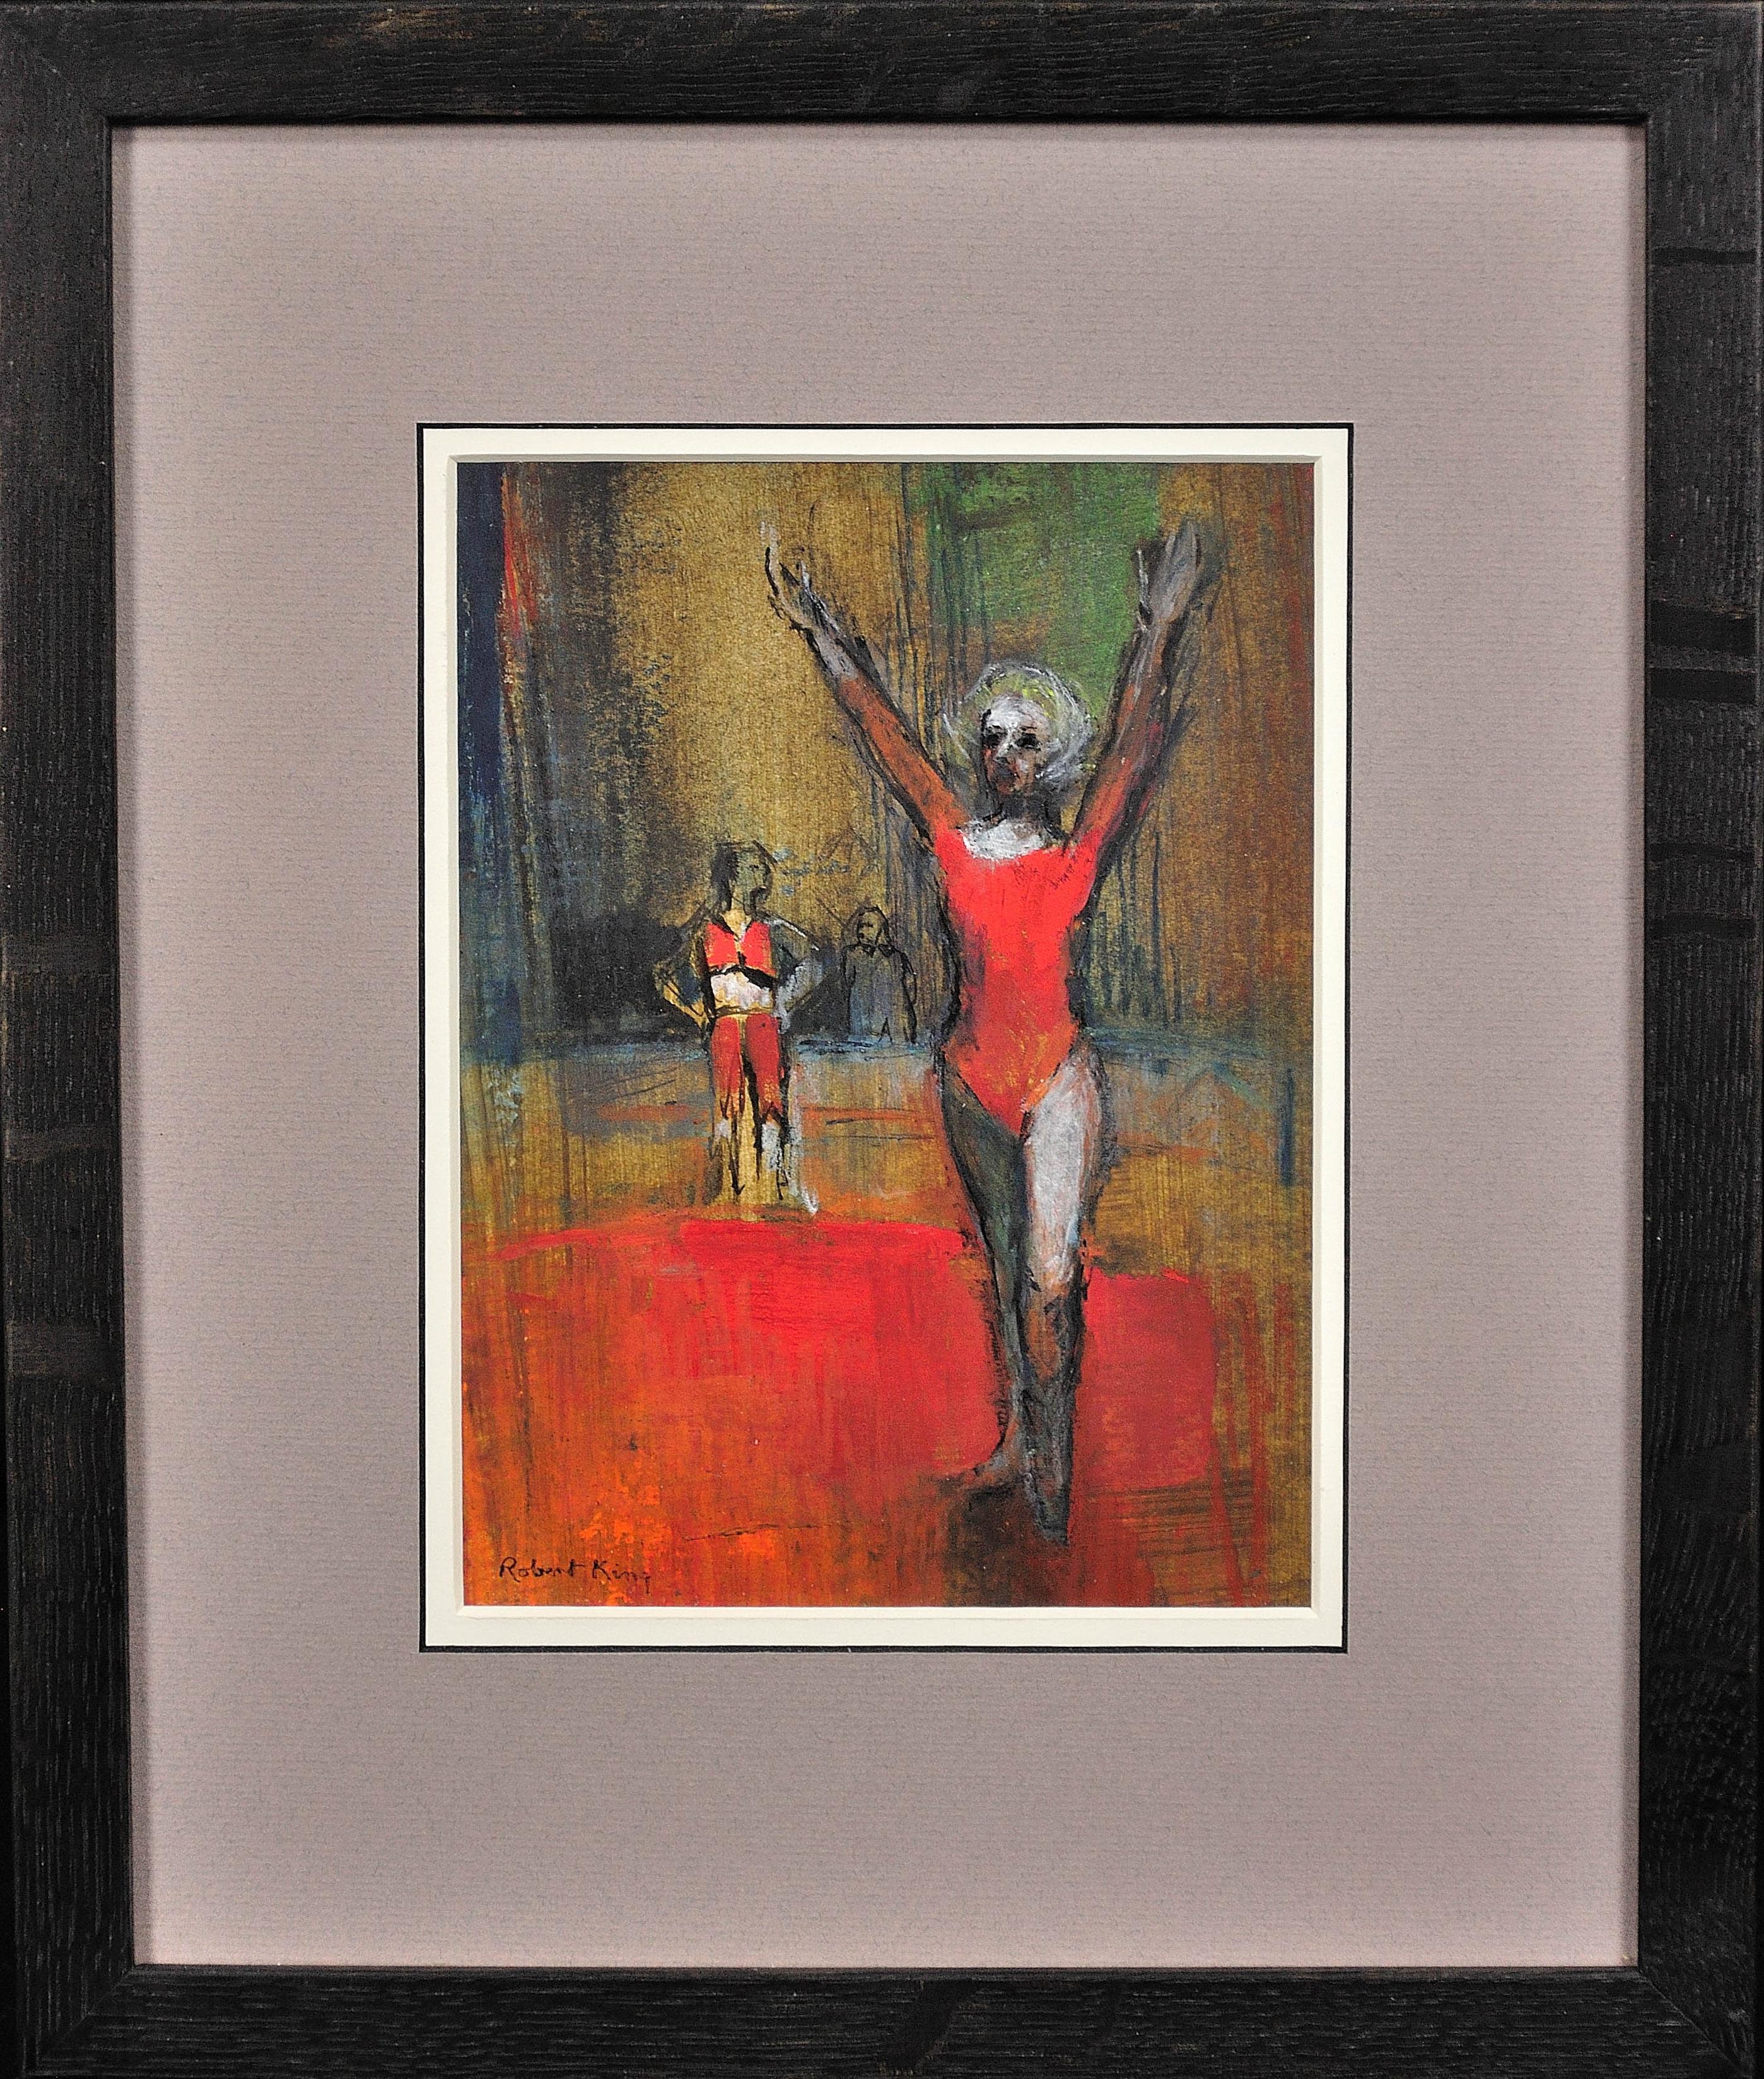 Robert King RI RSMA Figurative Art - Rhythmic Gymnast. Modern British Pastel.Competition.Judge.Coach.Reds. Composure.